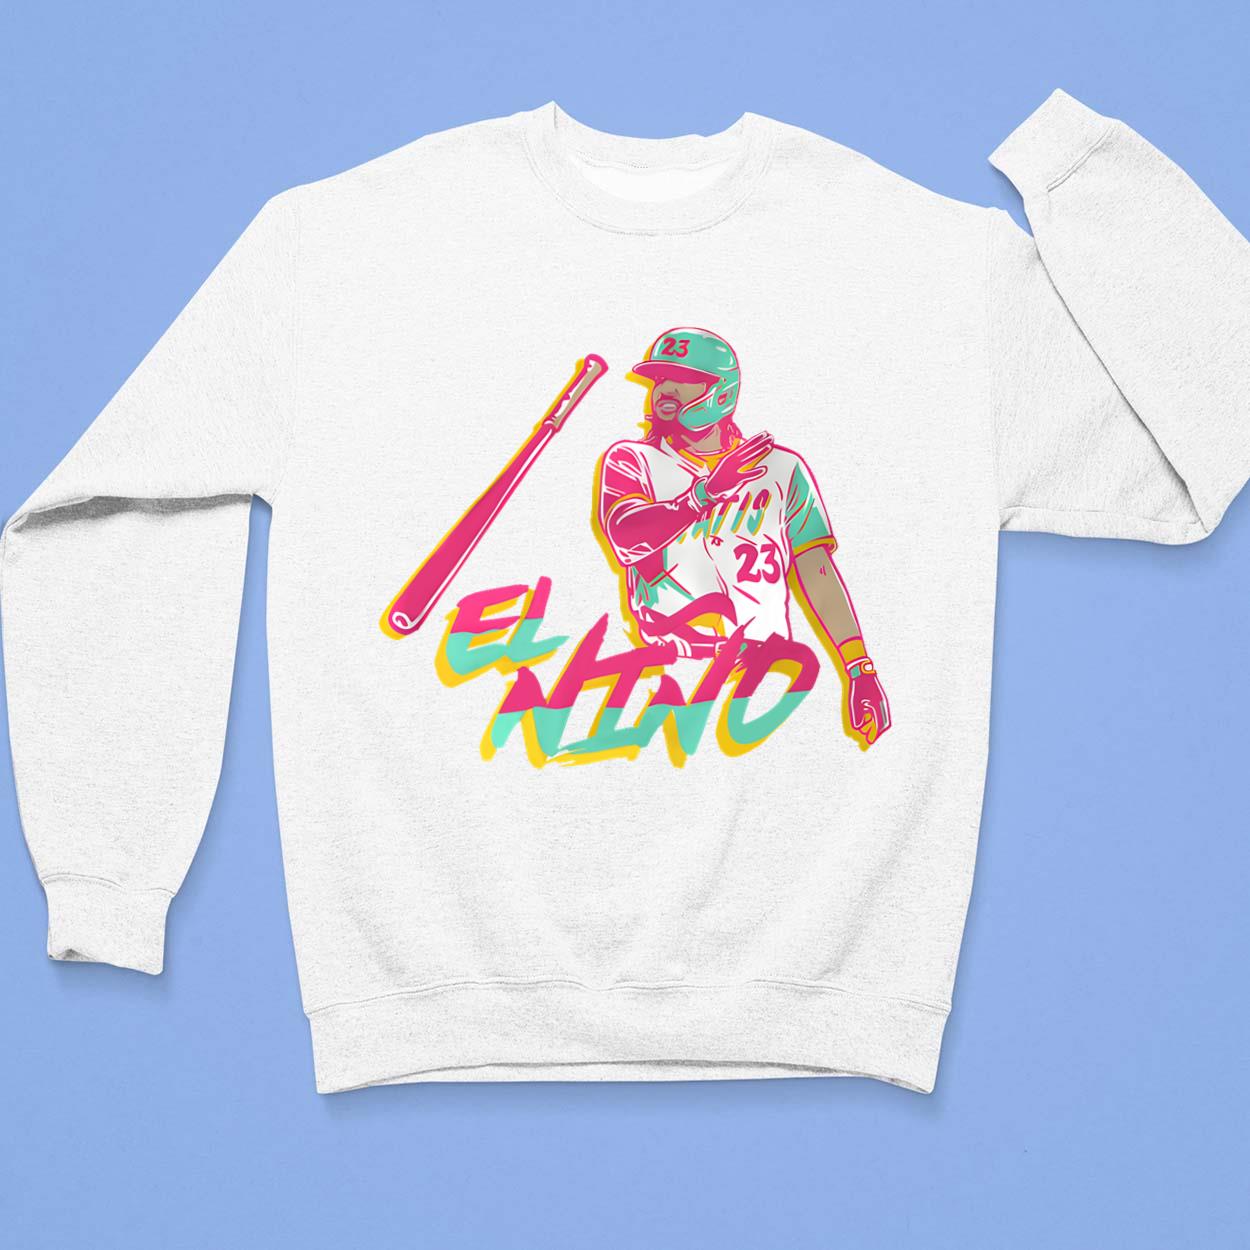 FERNANDO TATIS JR Baseball Player shirt, hoodie, longsleeve, sweatshirt,  v-neck tee